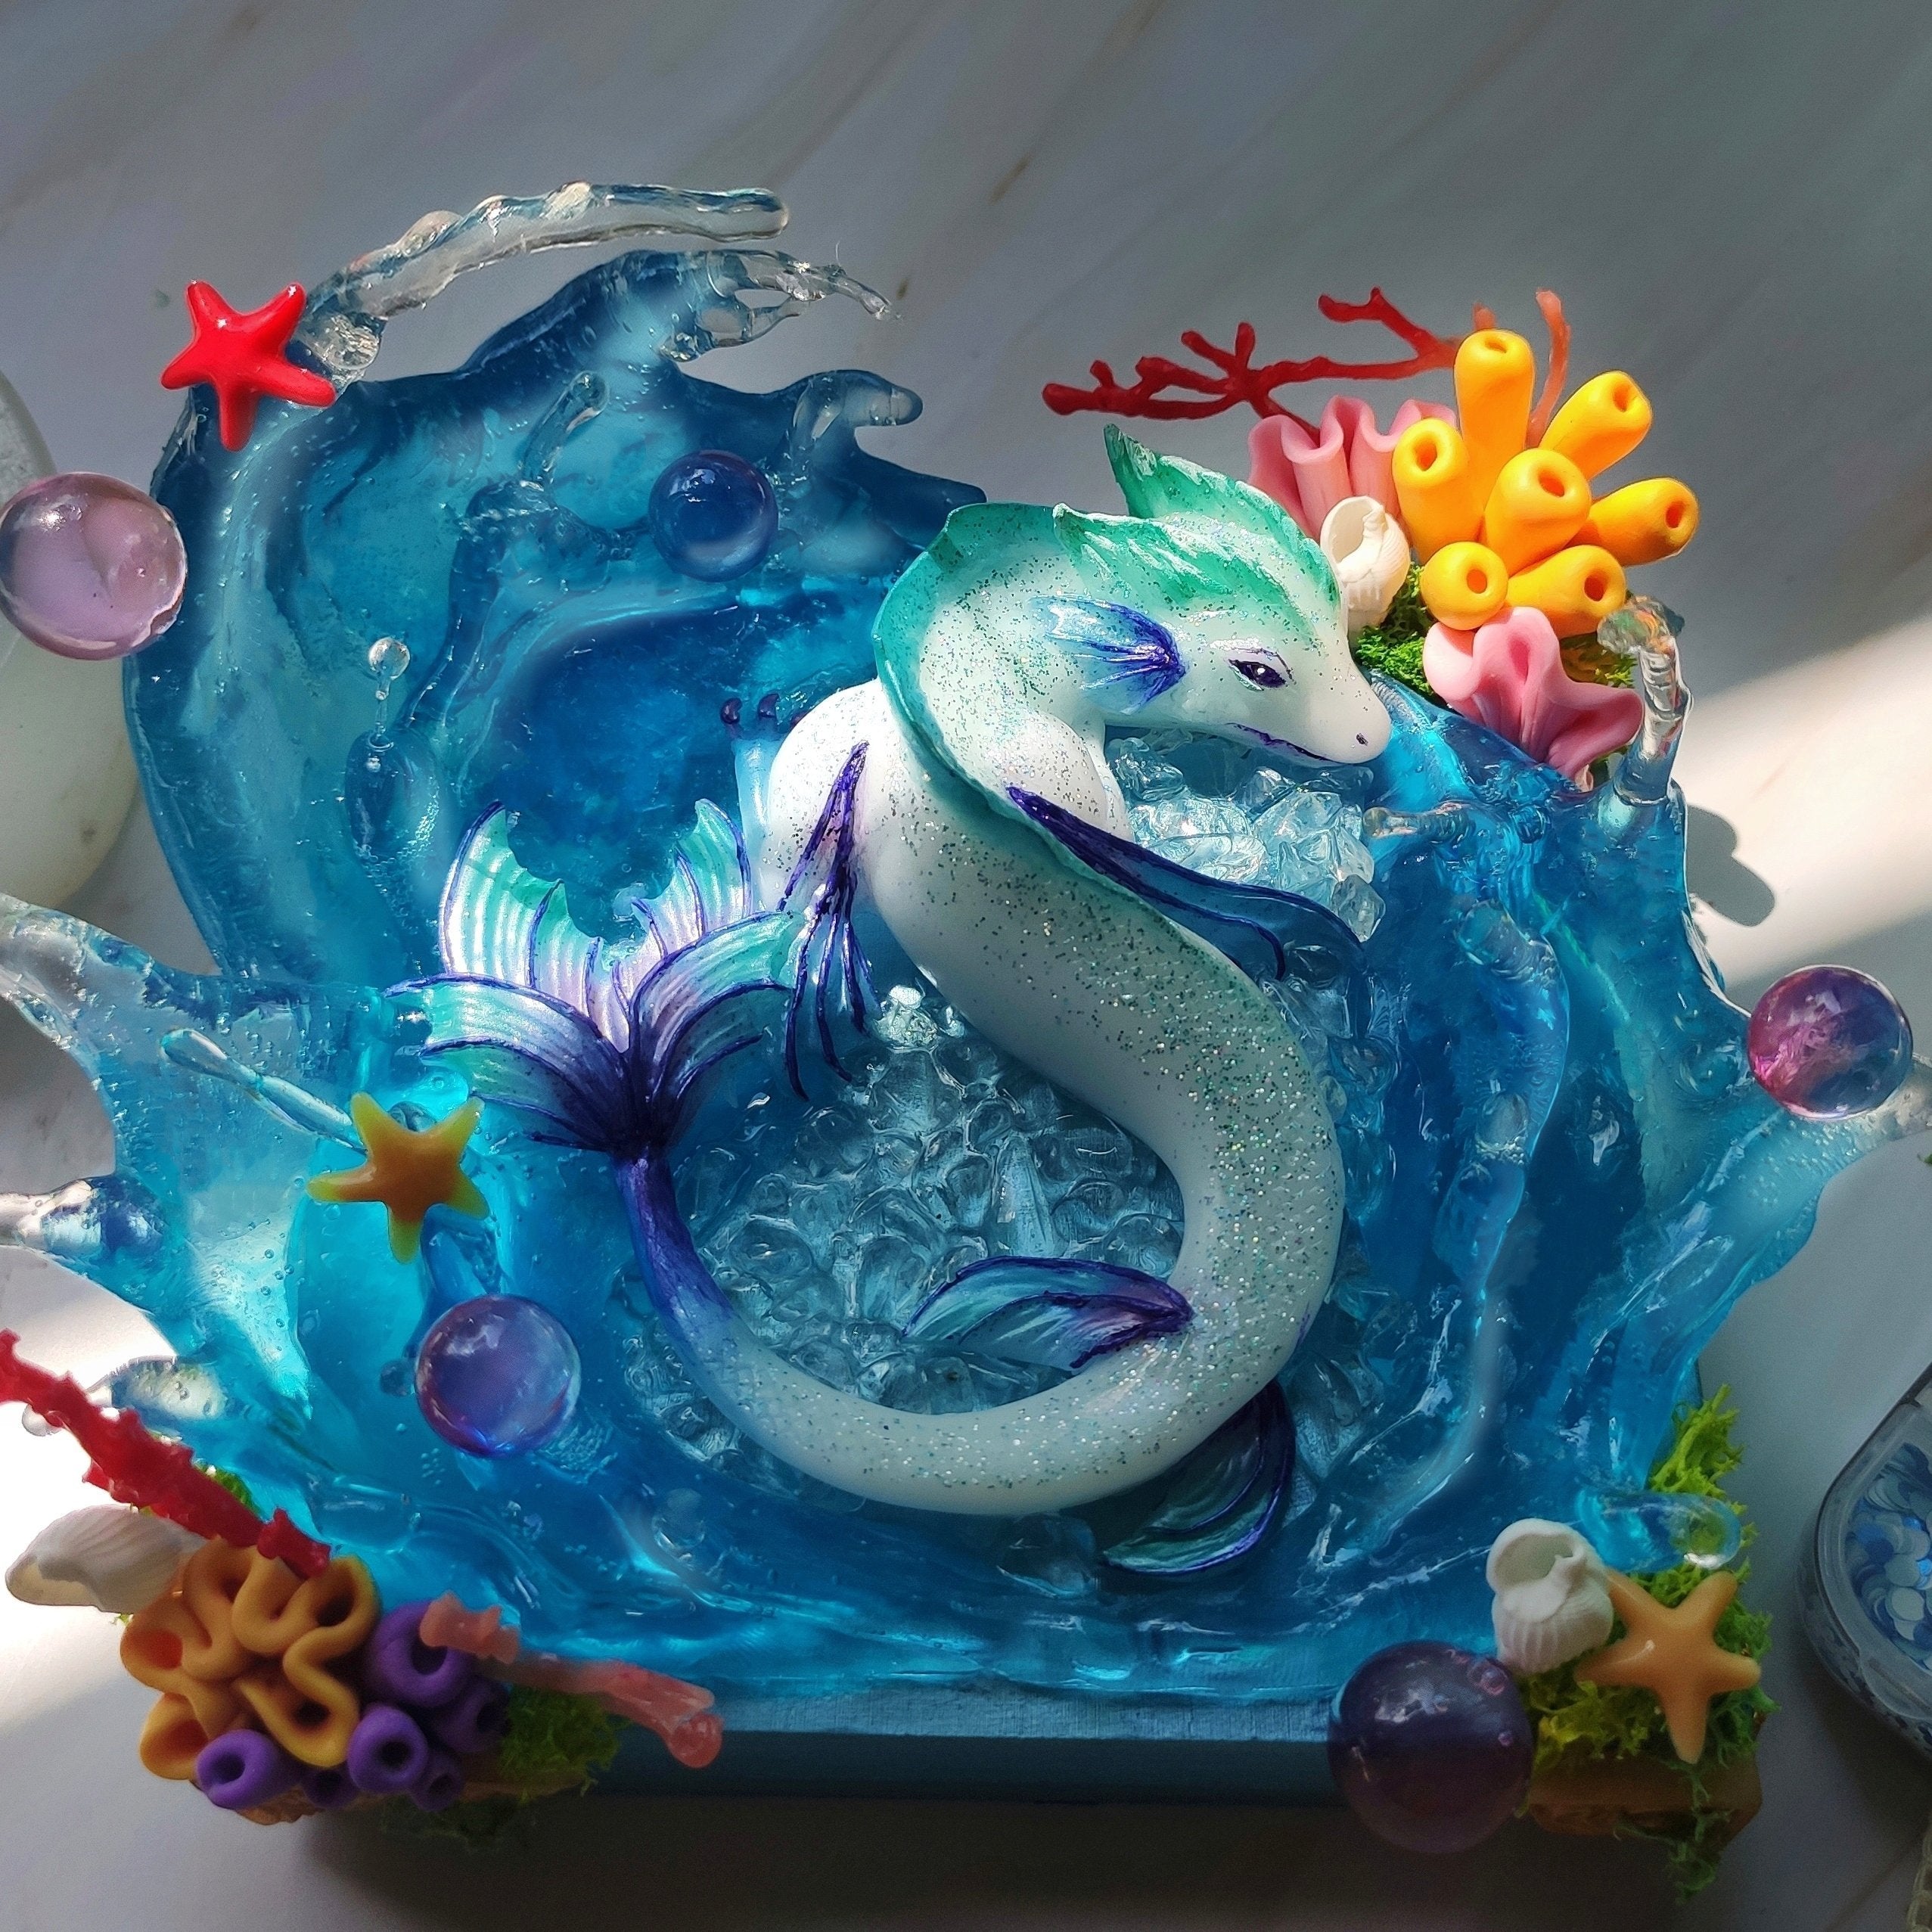 Moon Flying Dragon Epoxy Resin Mold - Create Mesmerizing 3D Dragon Crafts